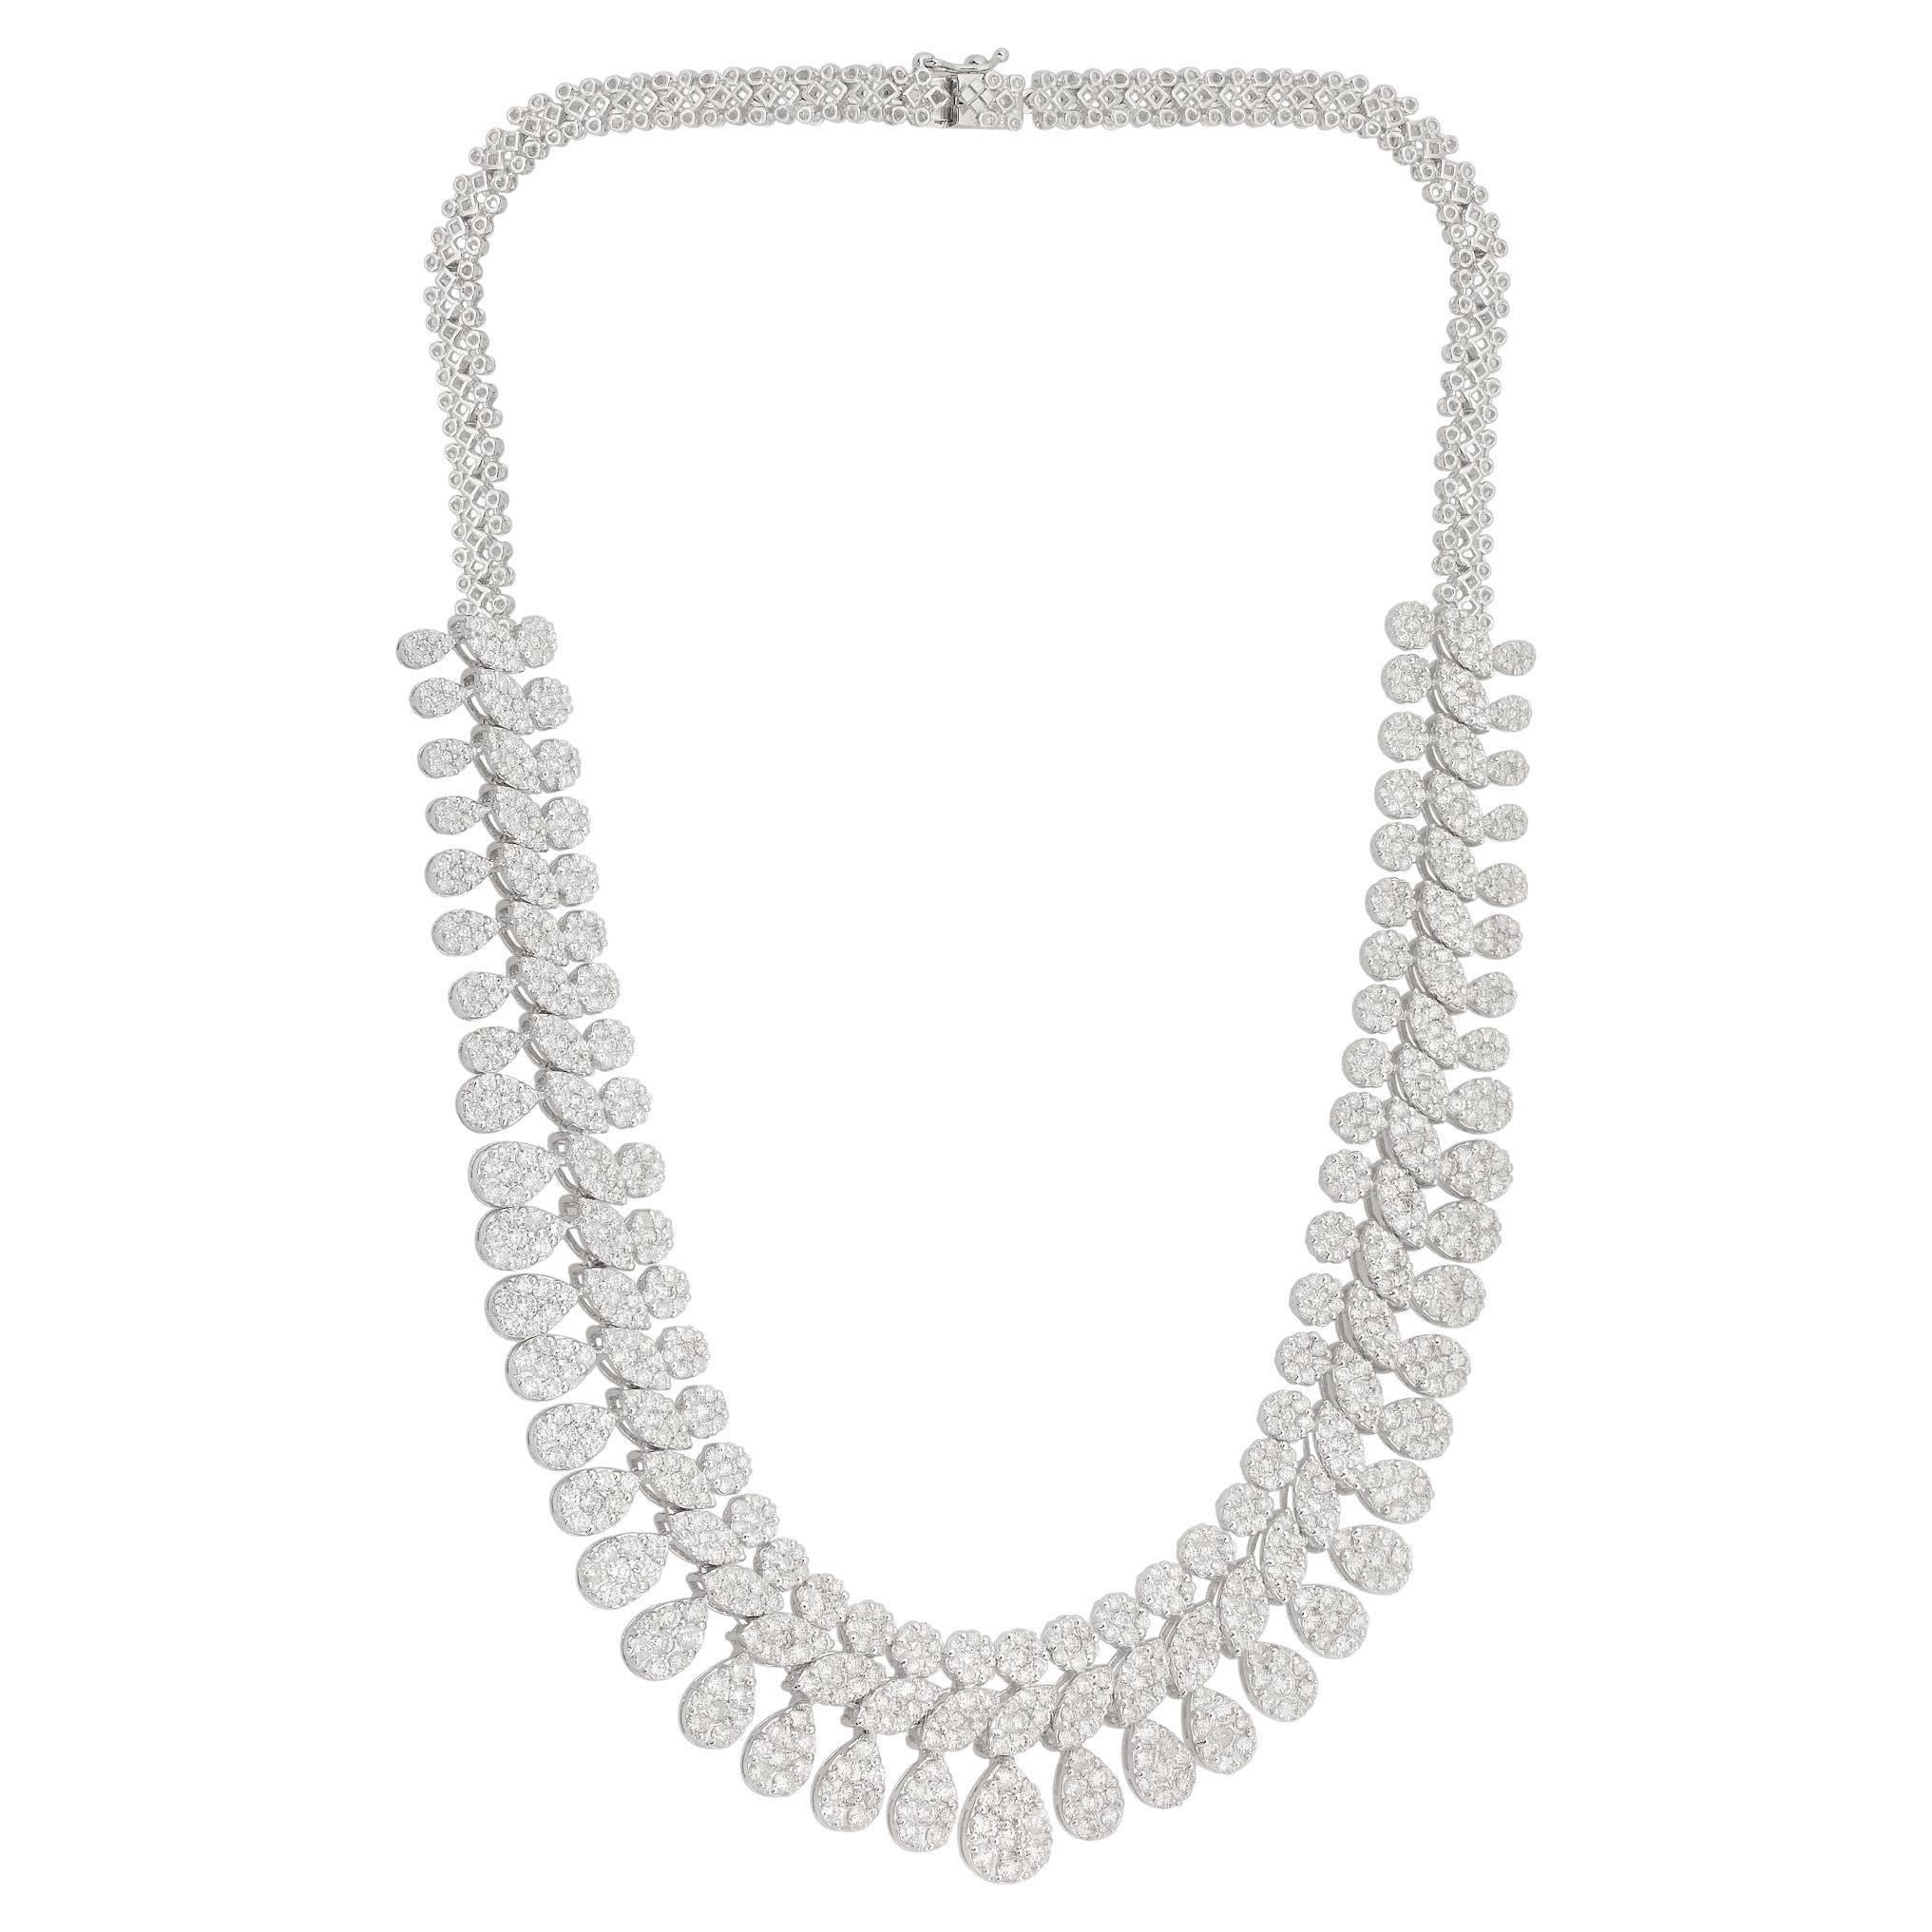 20.6 Carat SI Clarity HI Color Diamond Choker Necklace 18k White Gold Jewelry